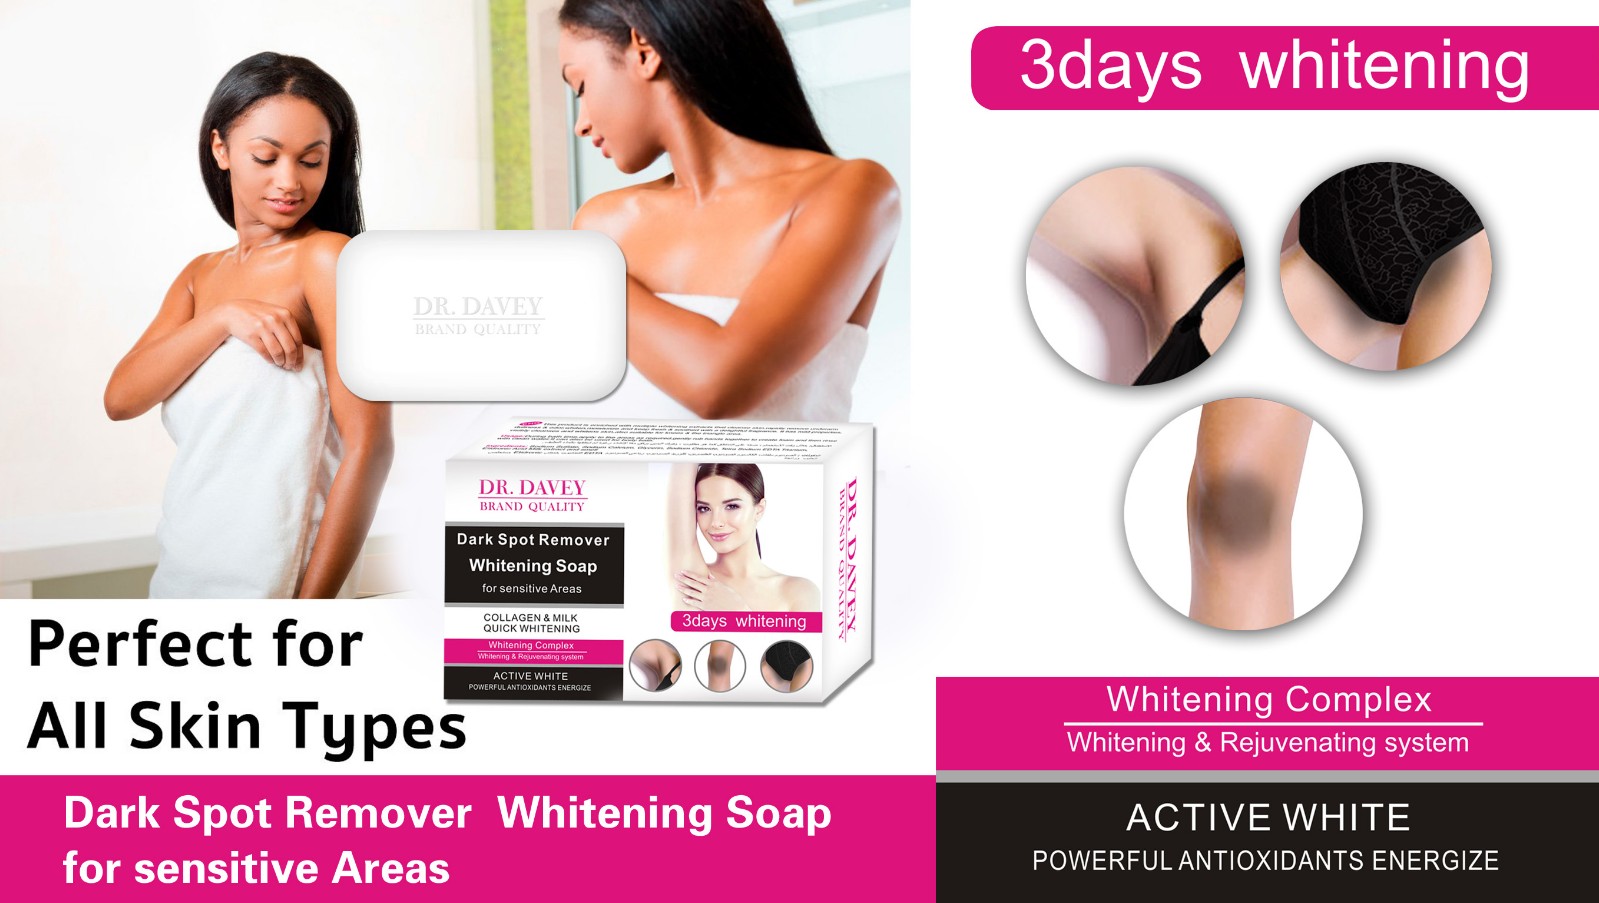 Dark Spot Remover Whitening Soap